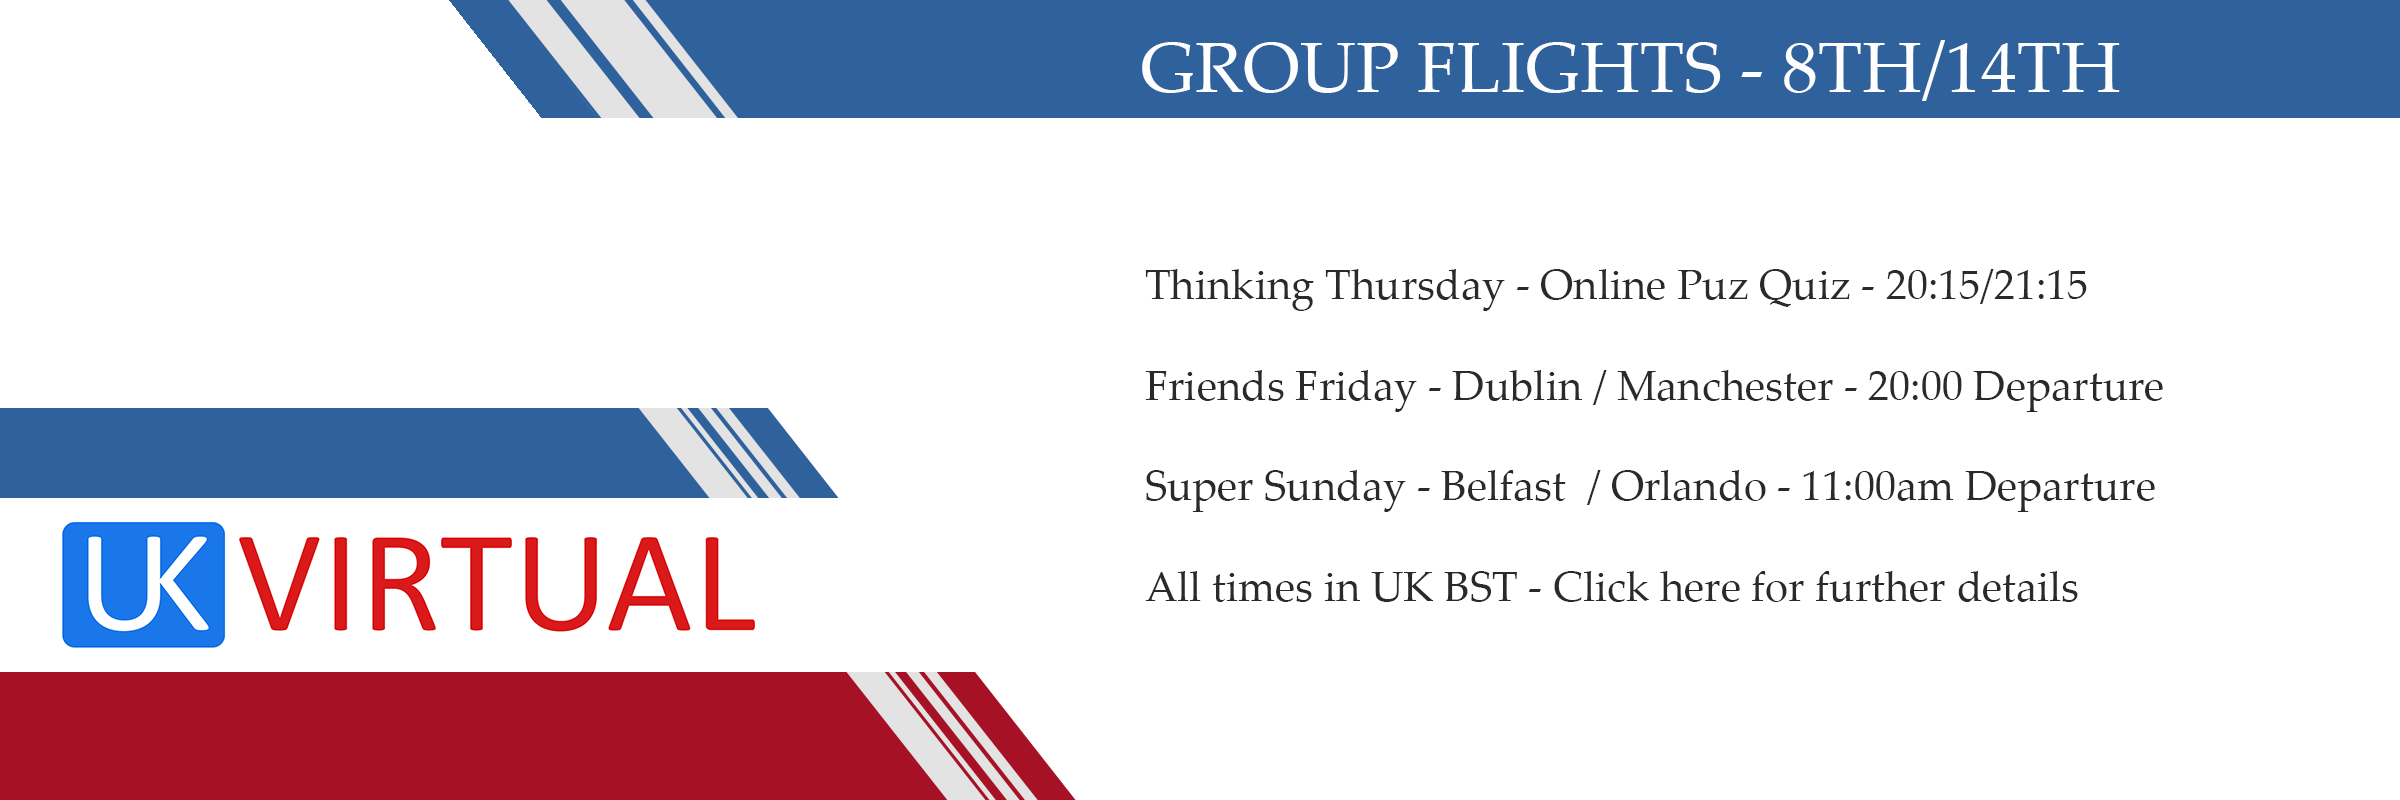 Group flights 8th/14th June 2020